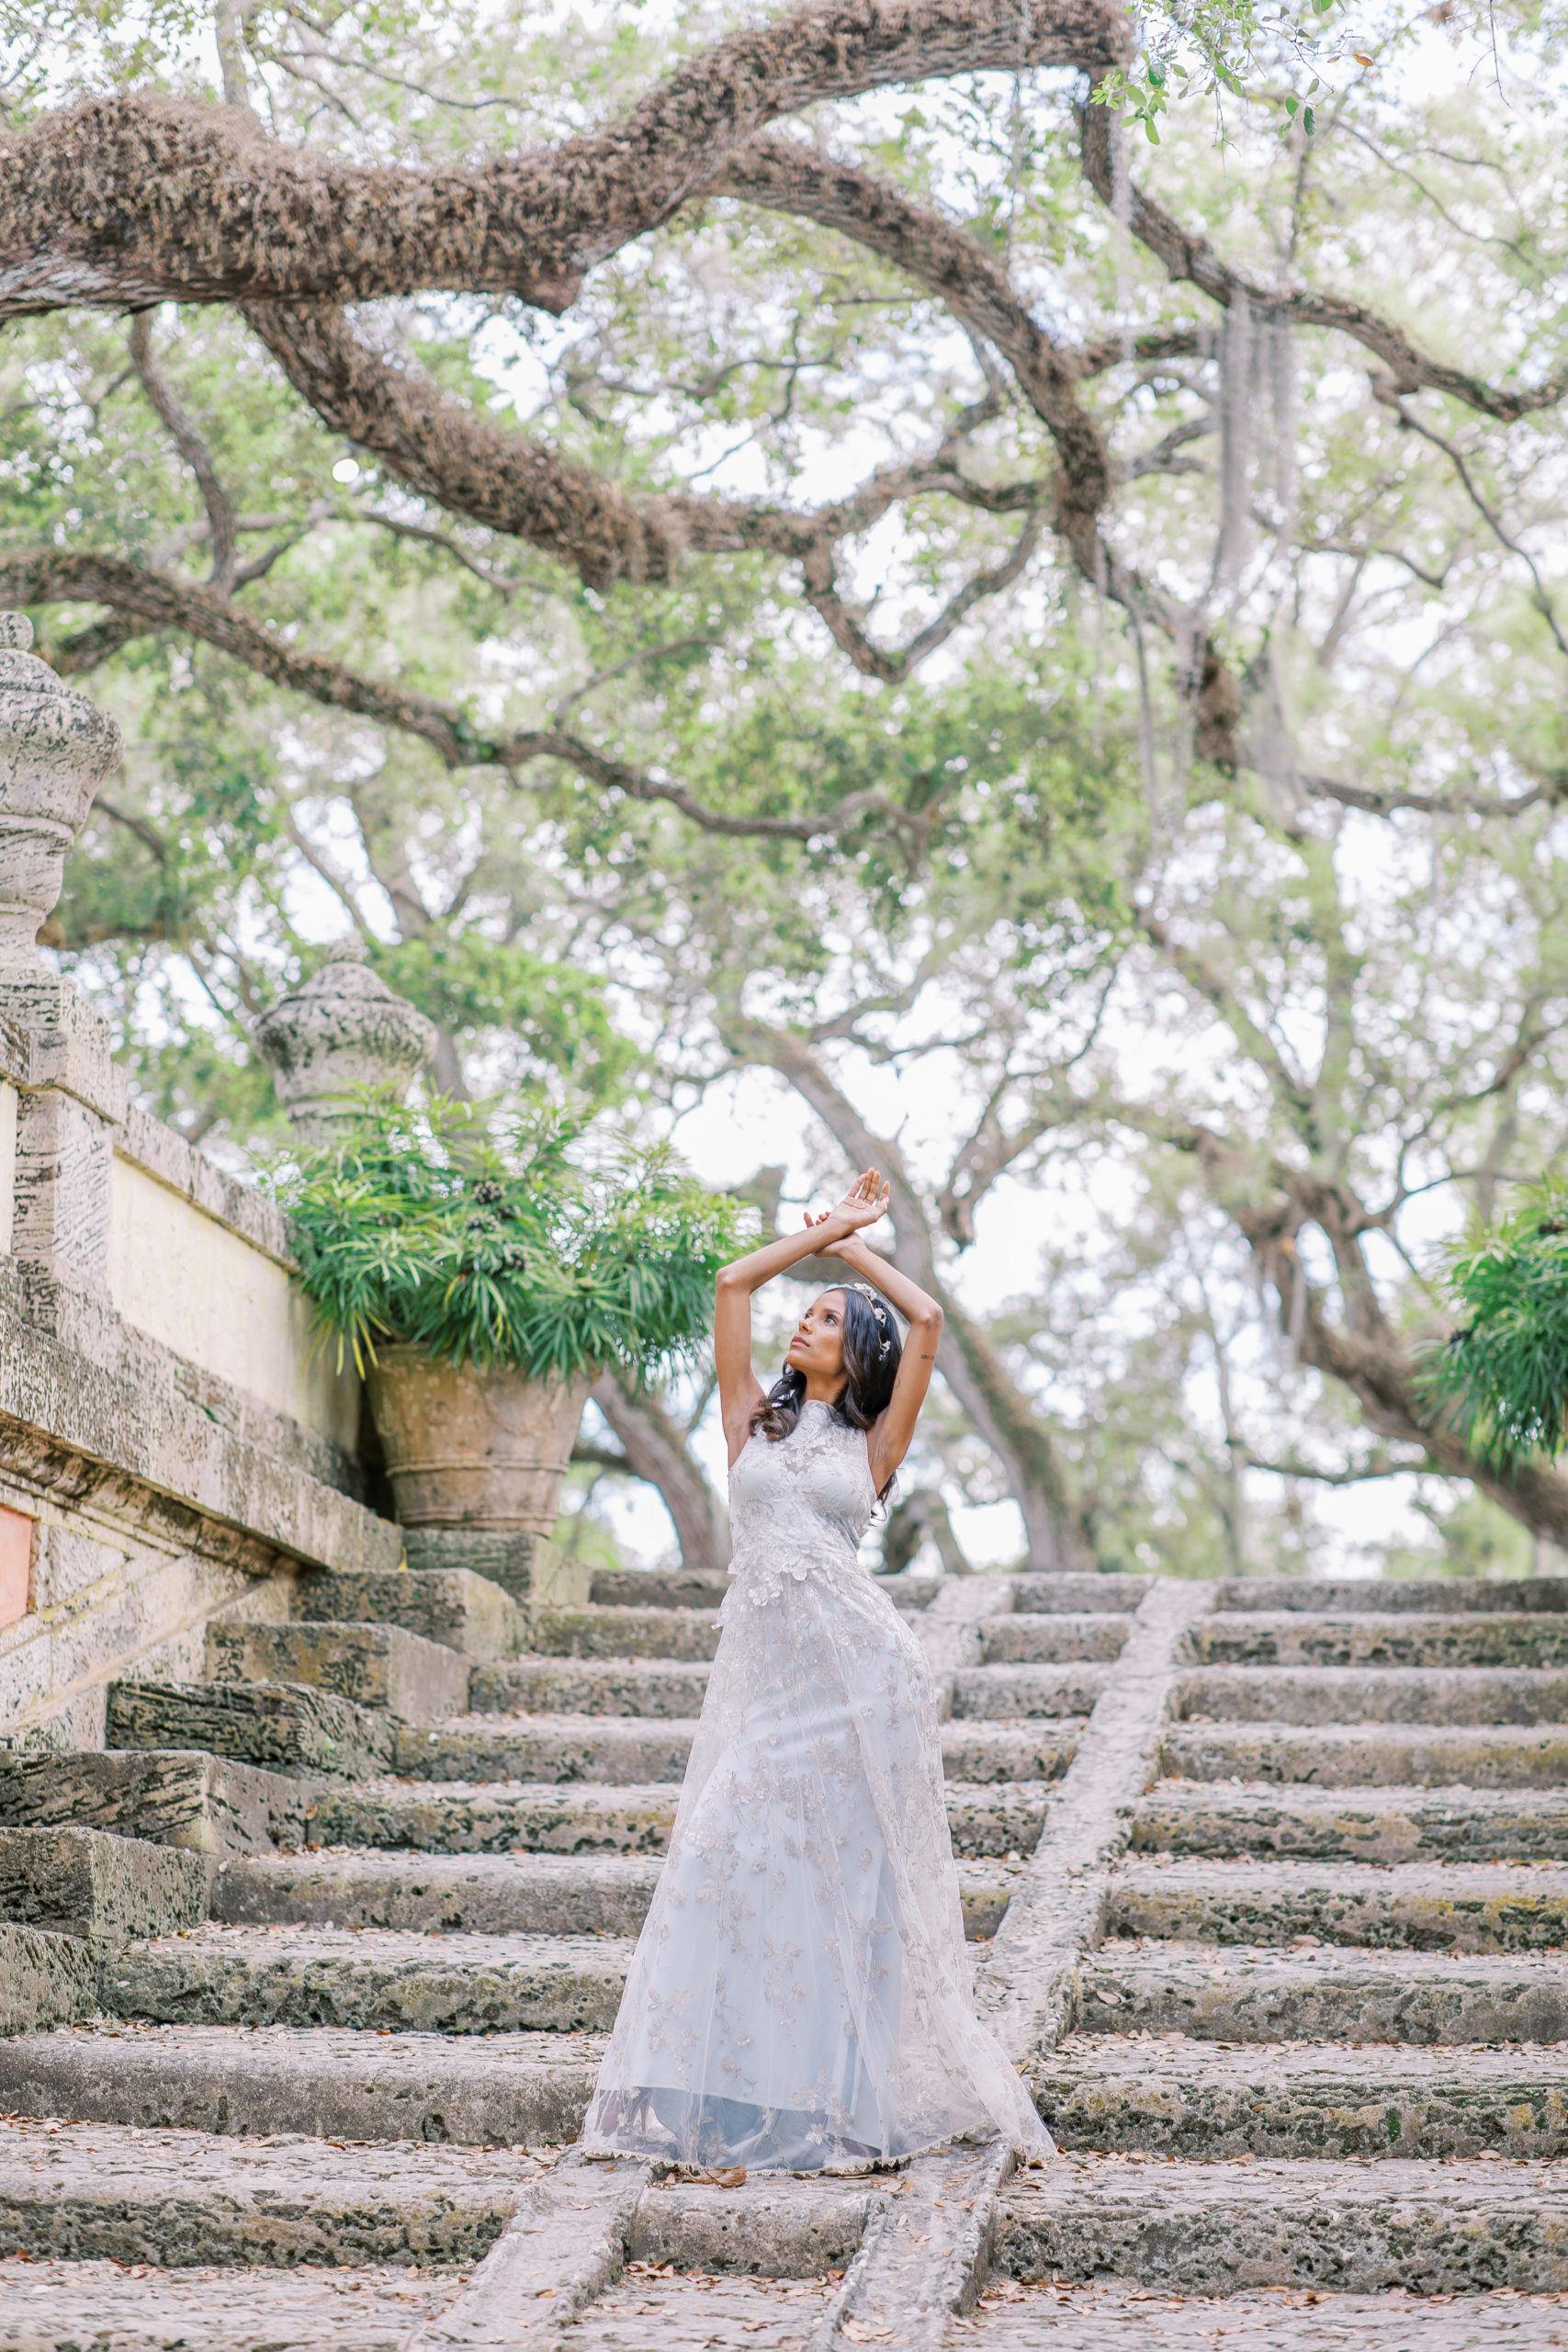 bride in blue and cream claire pettibone dress on stone steps